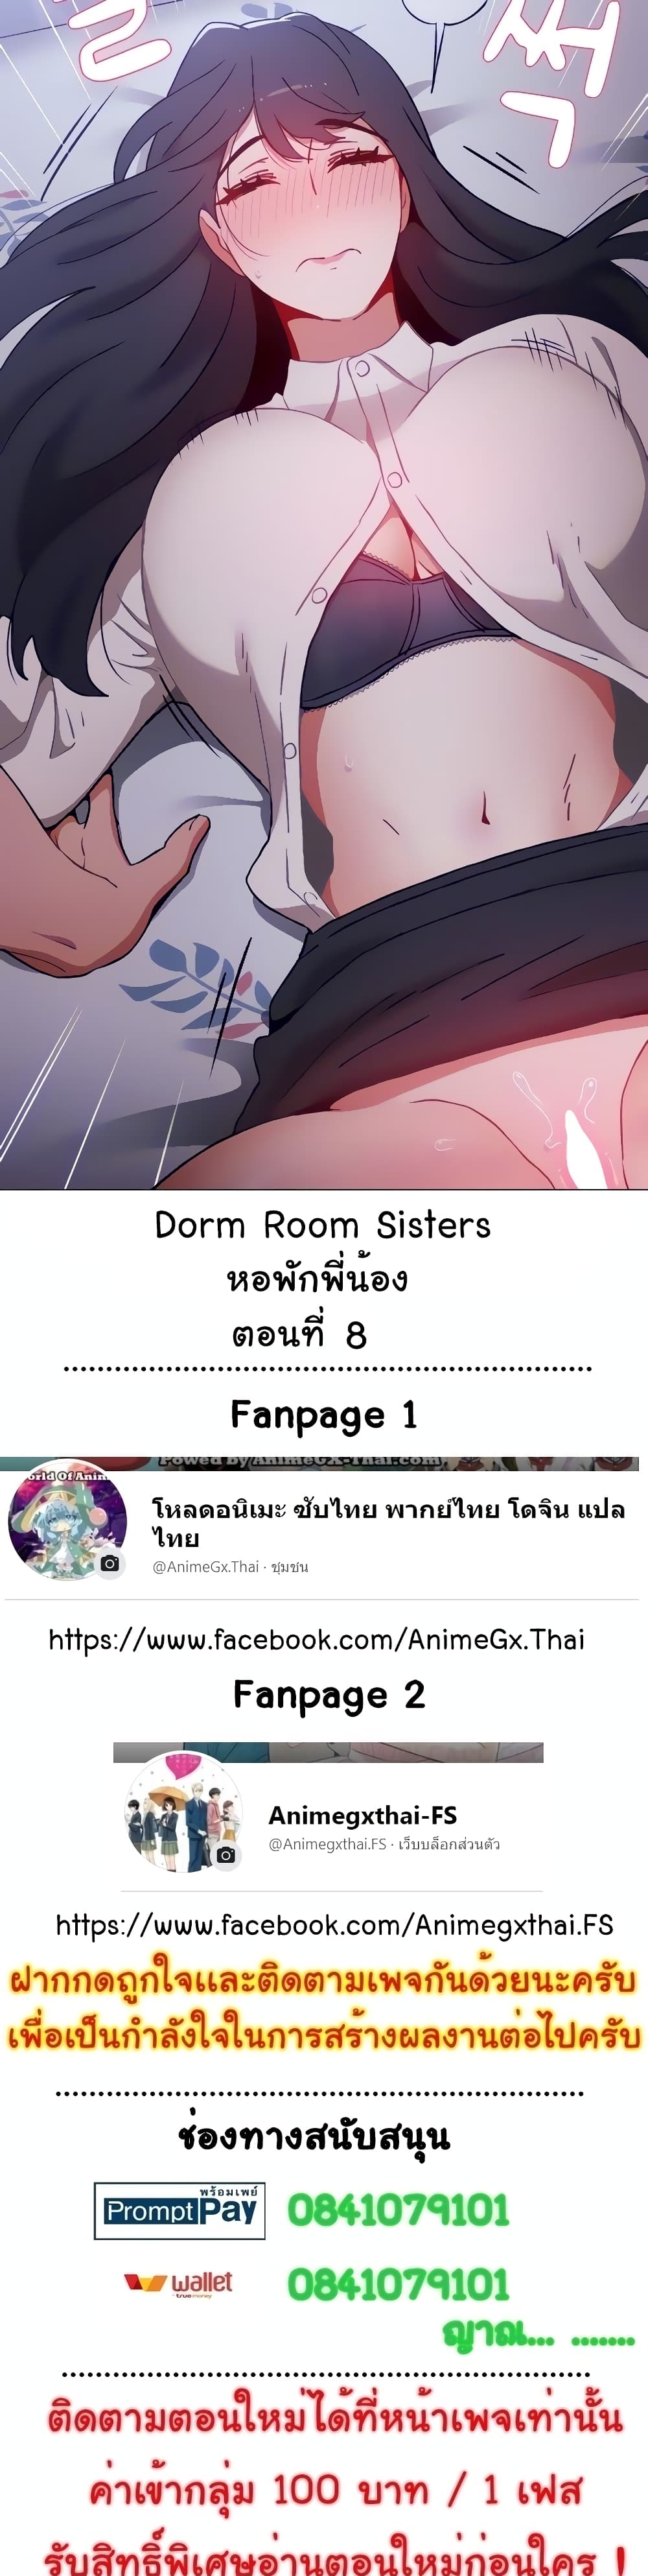 Dorm Room Sisters 8 (1)